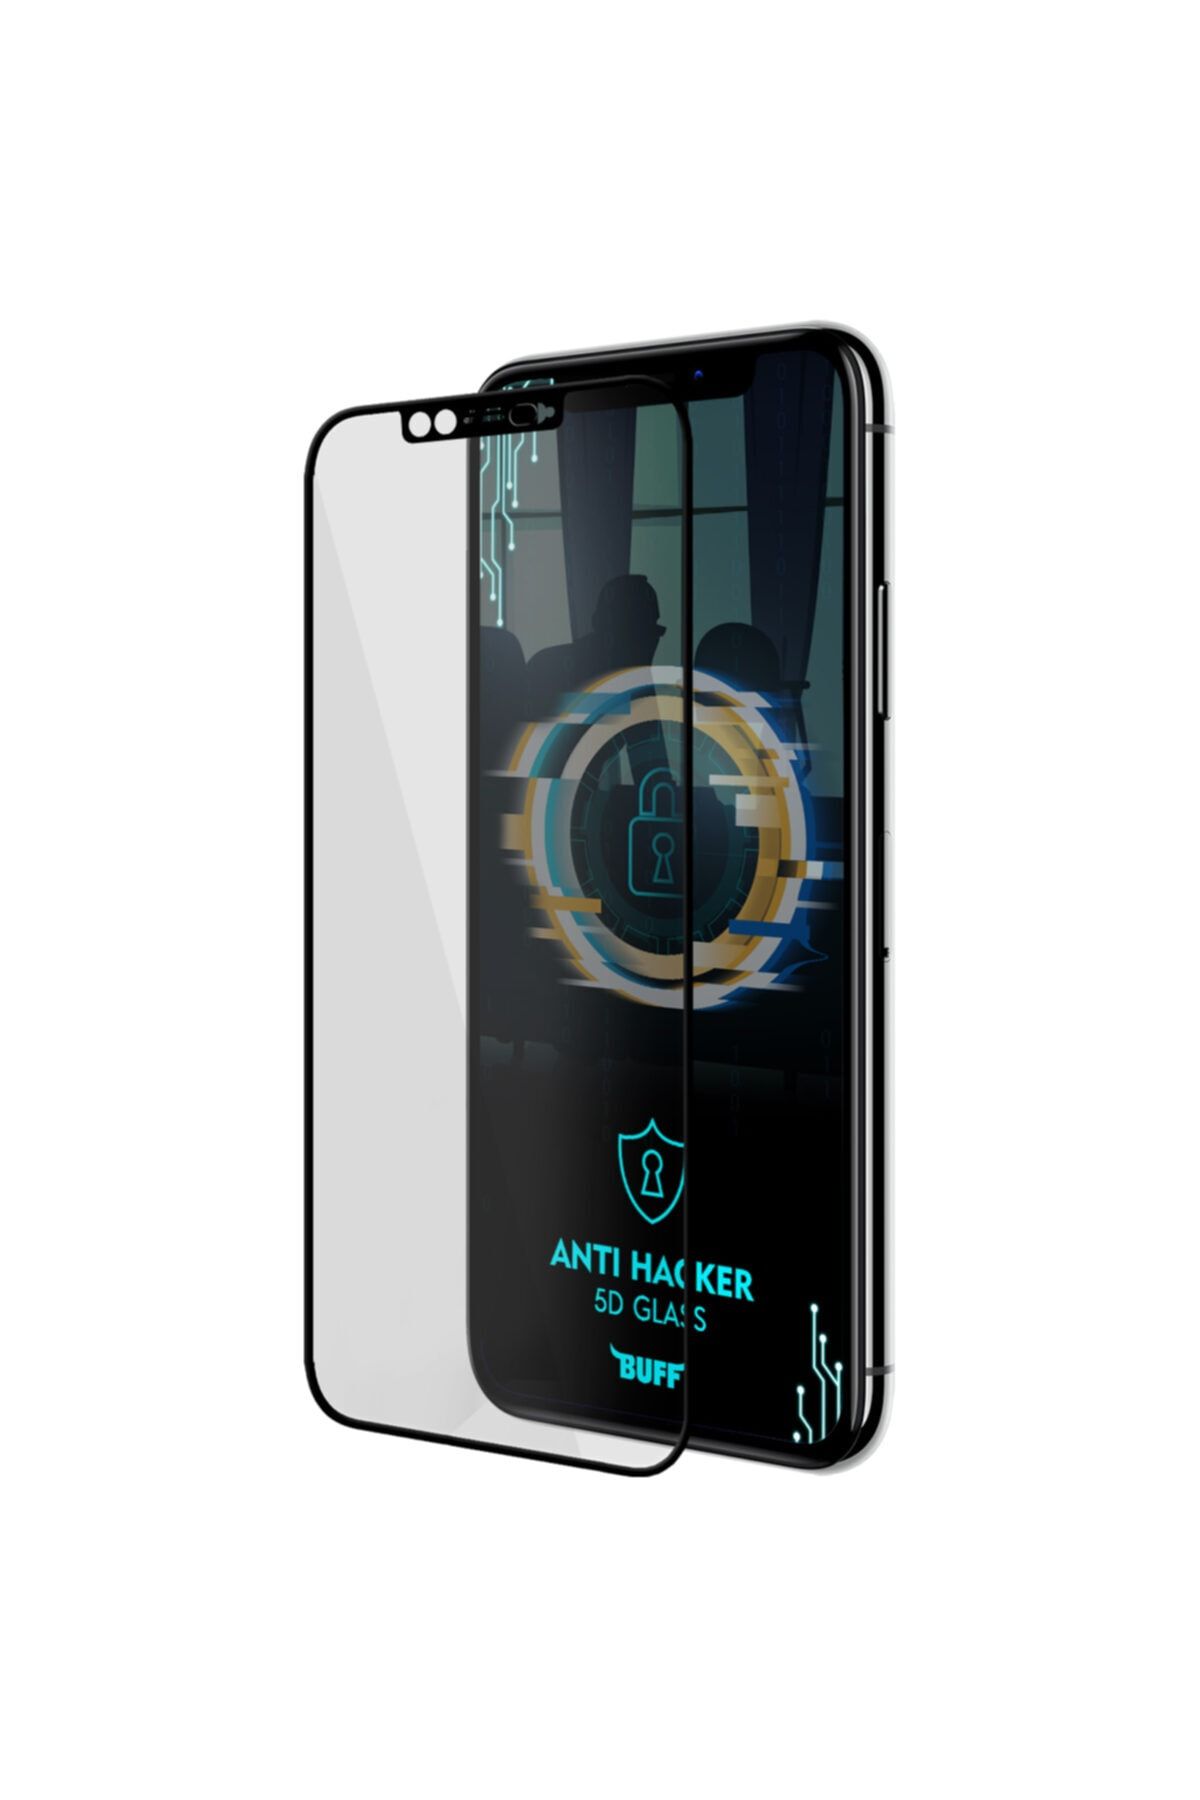 Buff Labs Buff Iphone 11/xr Uyumlu 5d Glass Anti Hacker Ekran Koruyucu